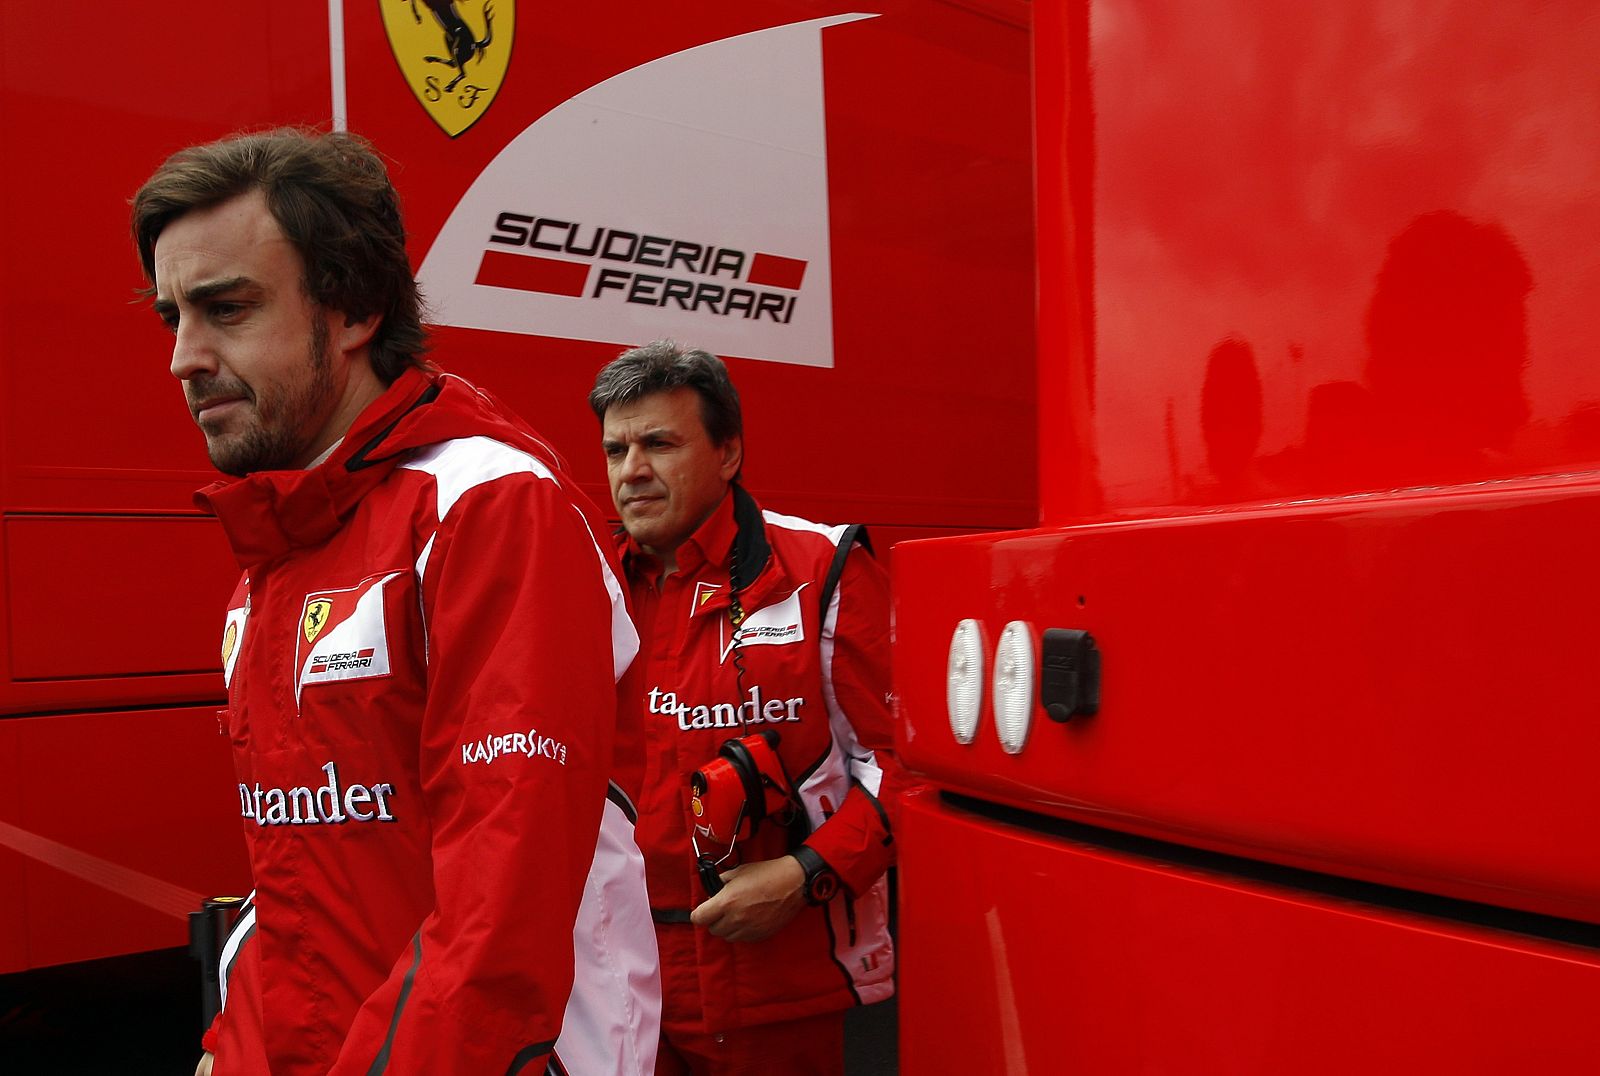 El piloto español de Ferrari, Fernando Alonso, en Mugello